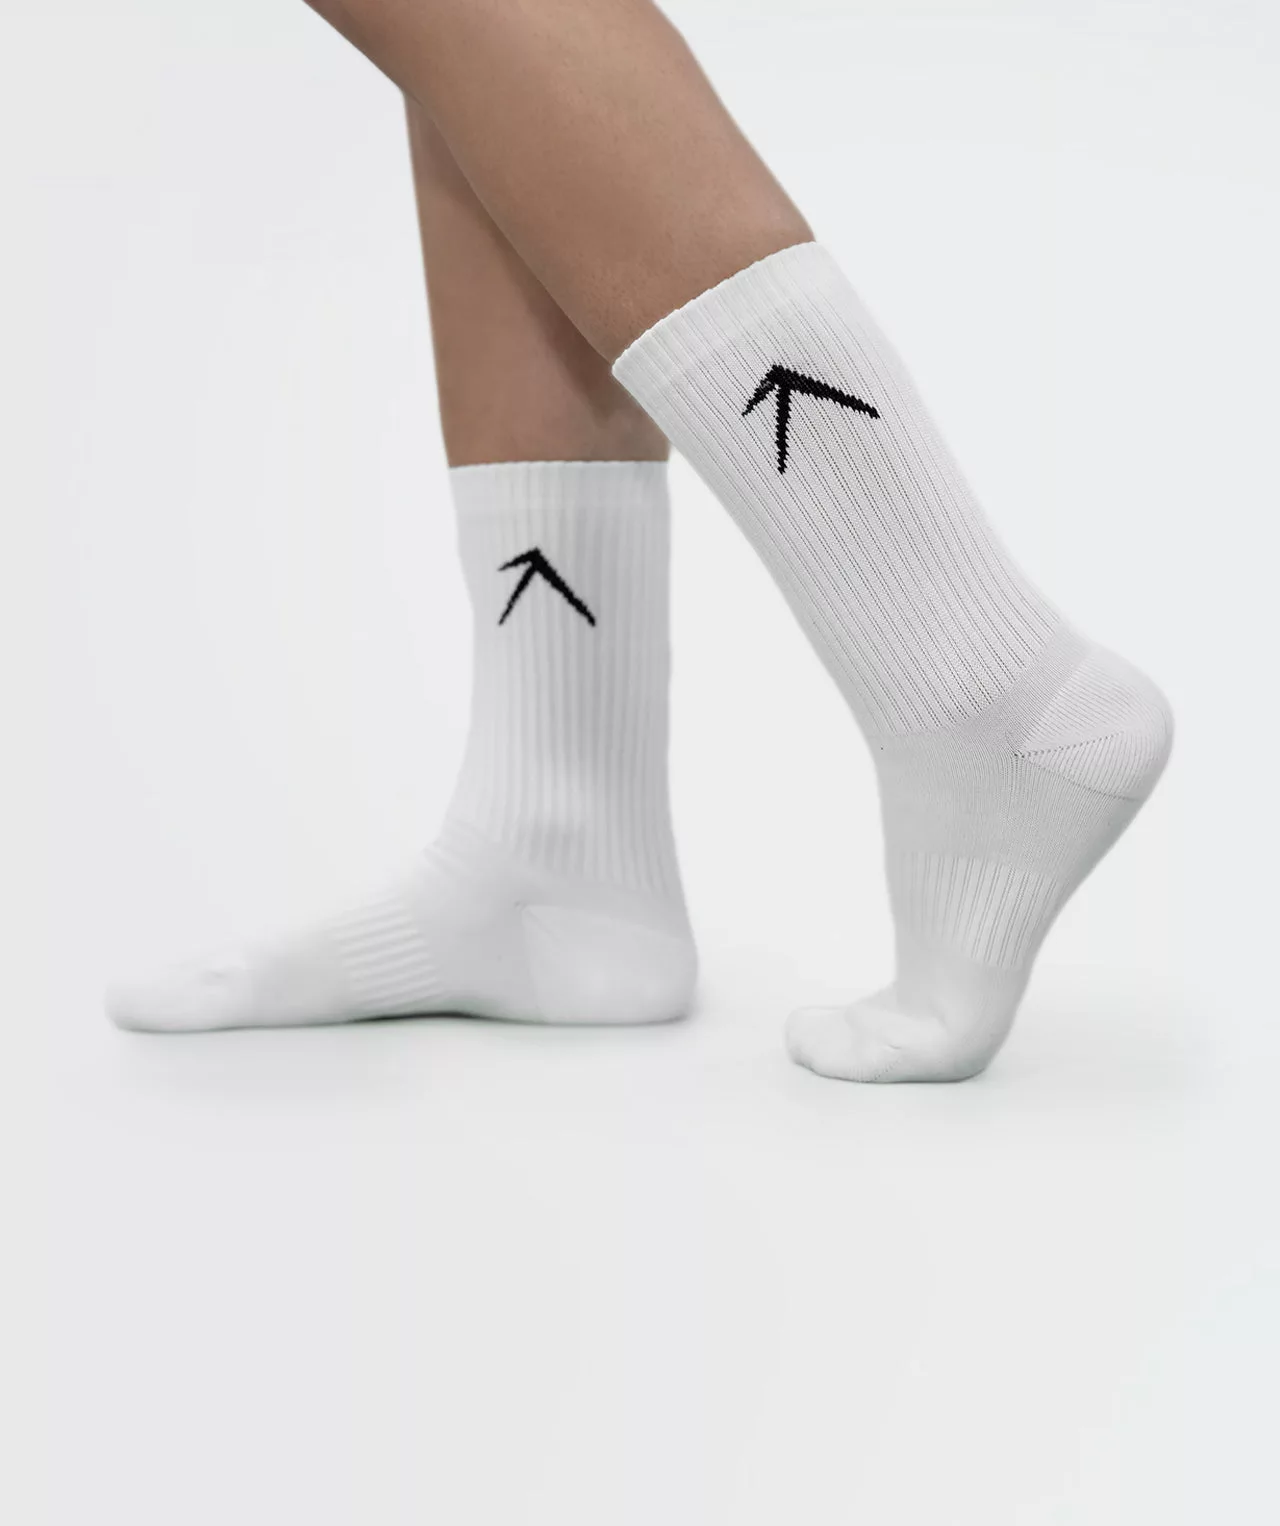 Unisex Crew Dry Touch Socks - Pack of 3 White Image 1